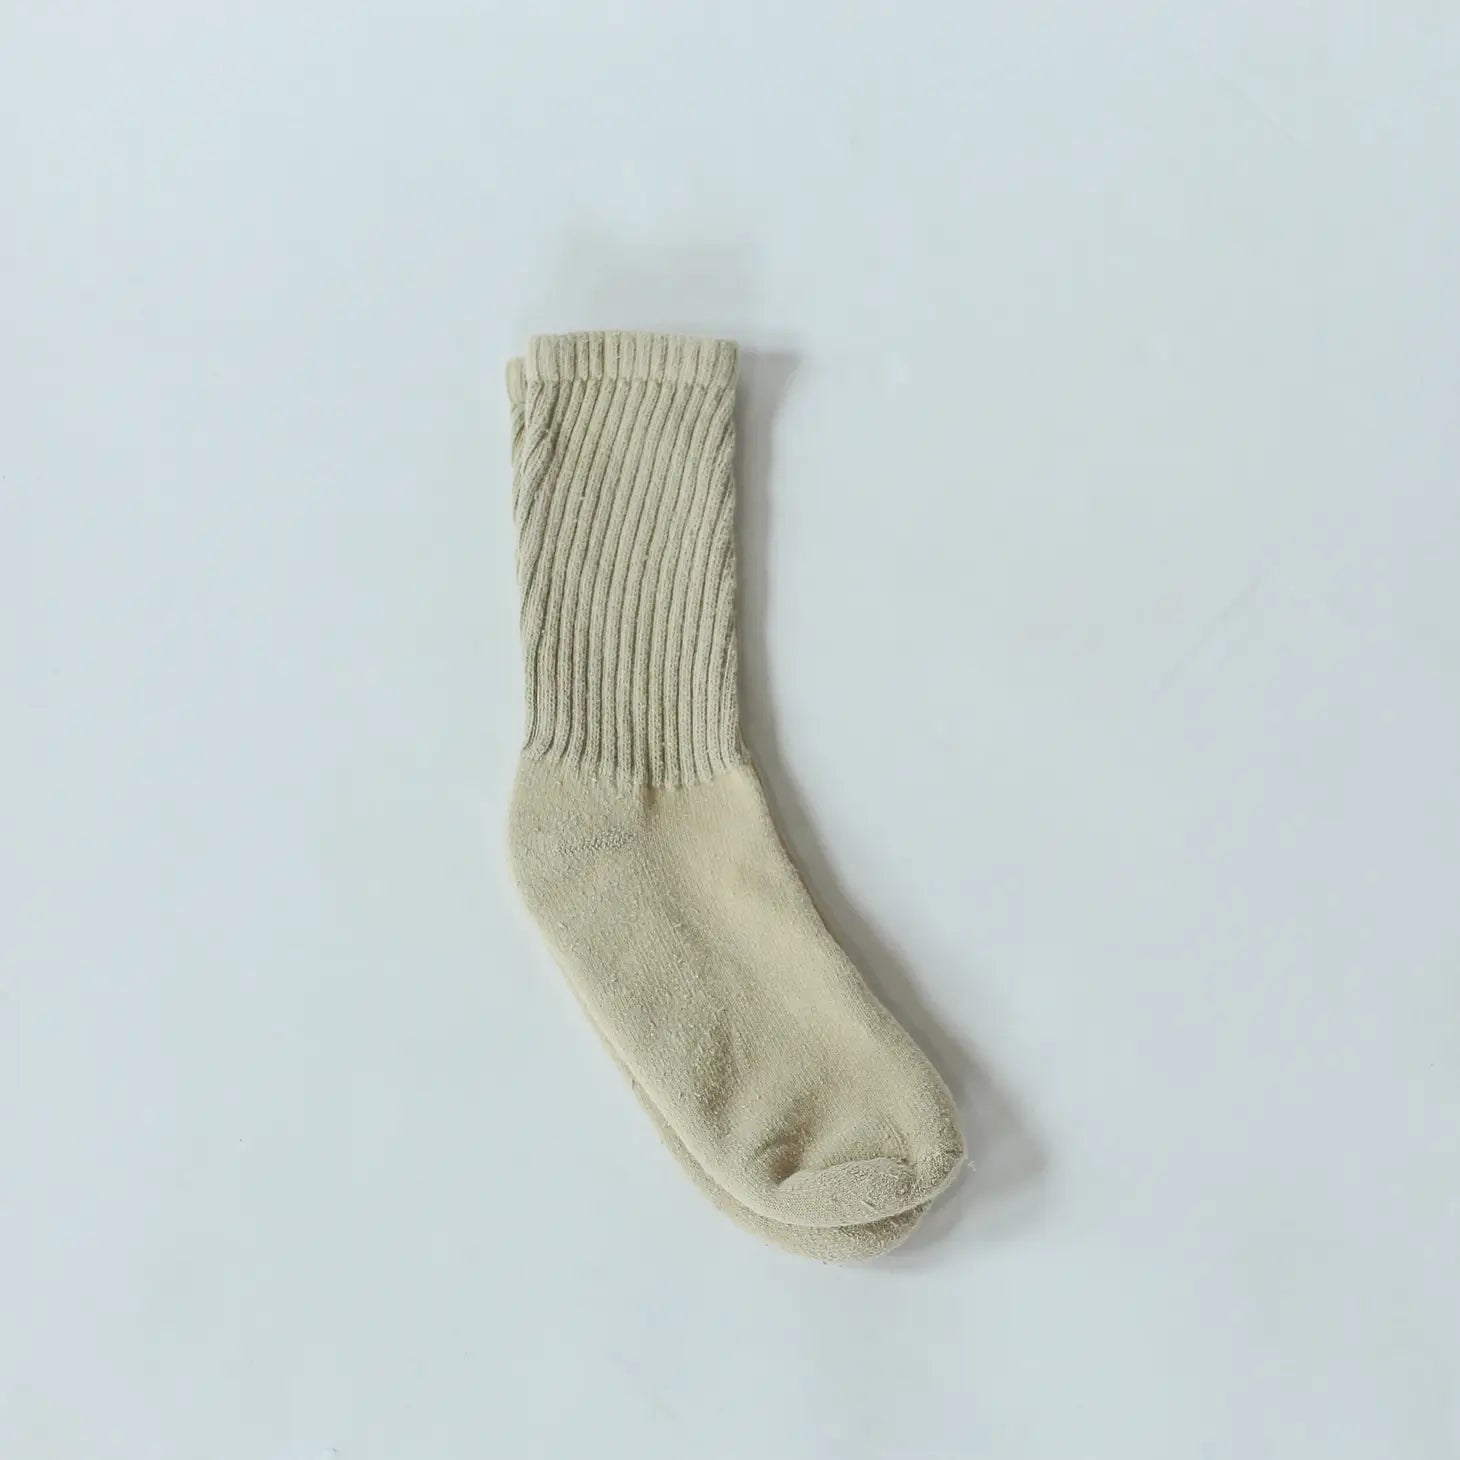 Elsewhere Socks - Palo Santo Tan - Proper